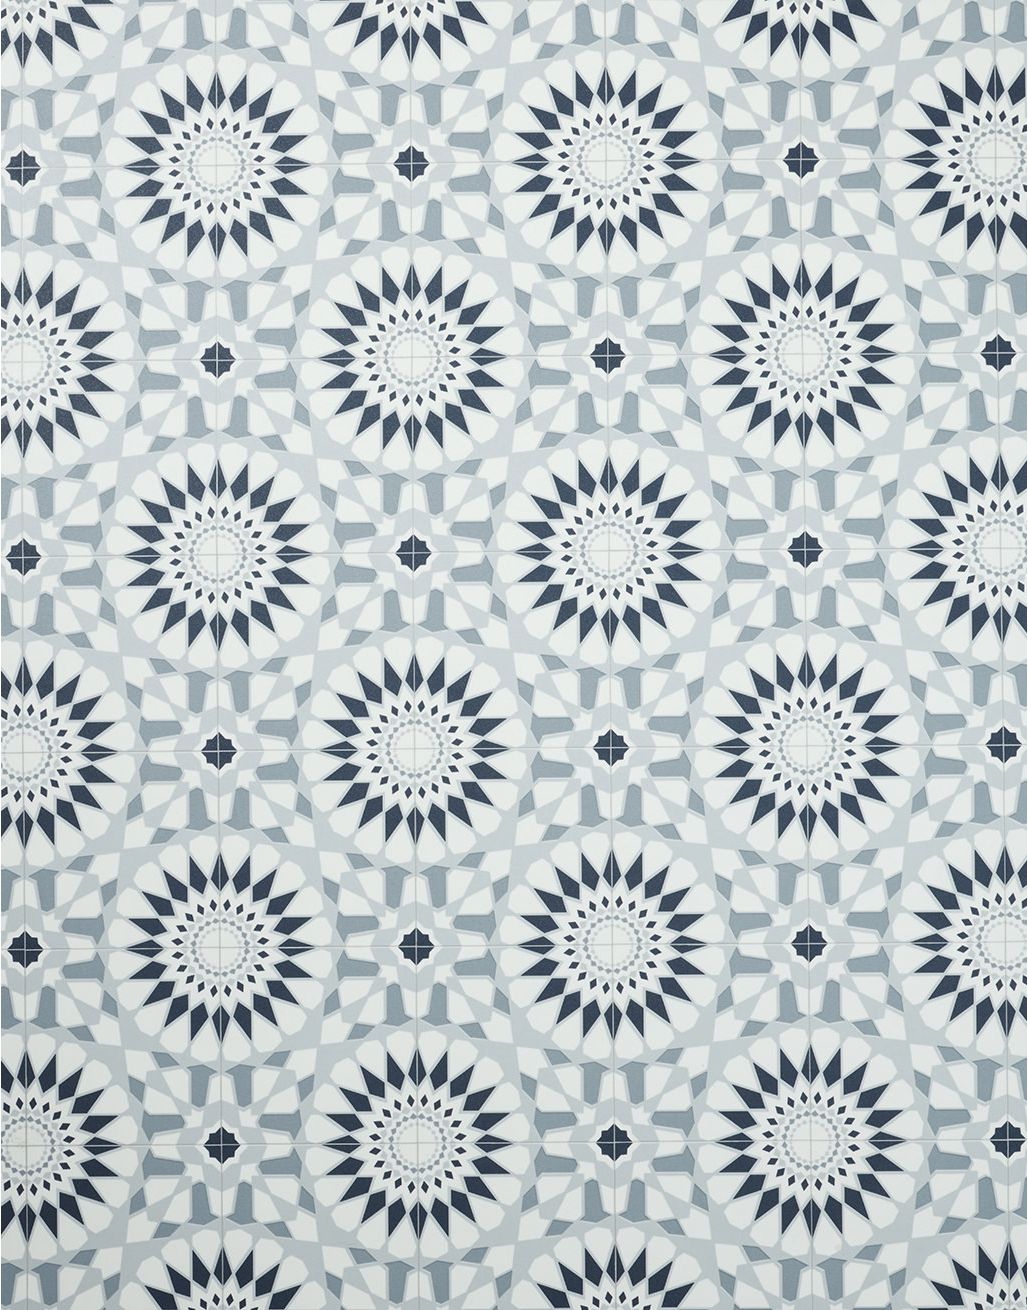 Patterned Tiles - Kaleidoscope 3